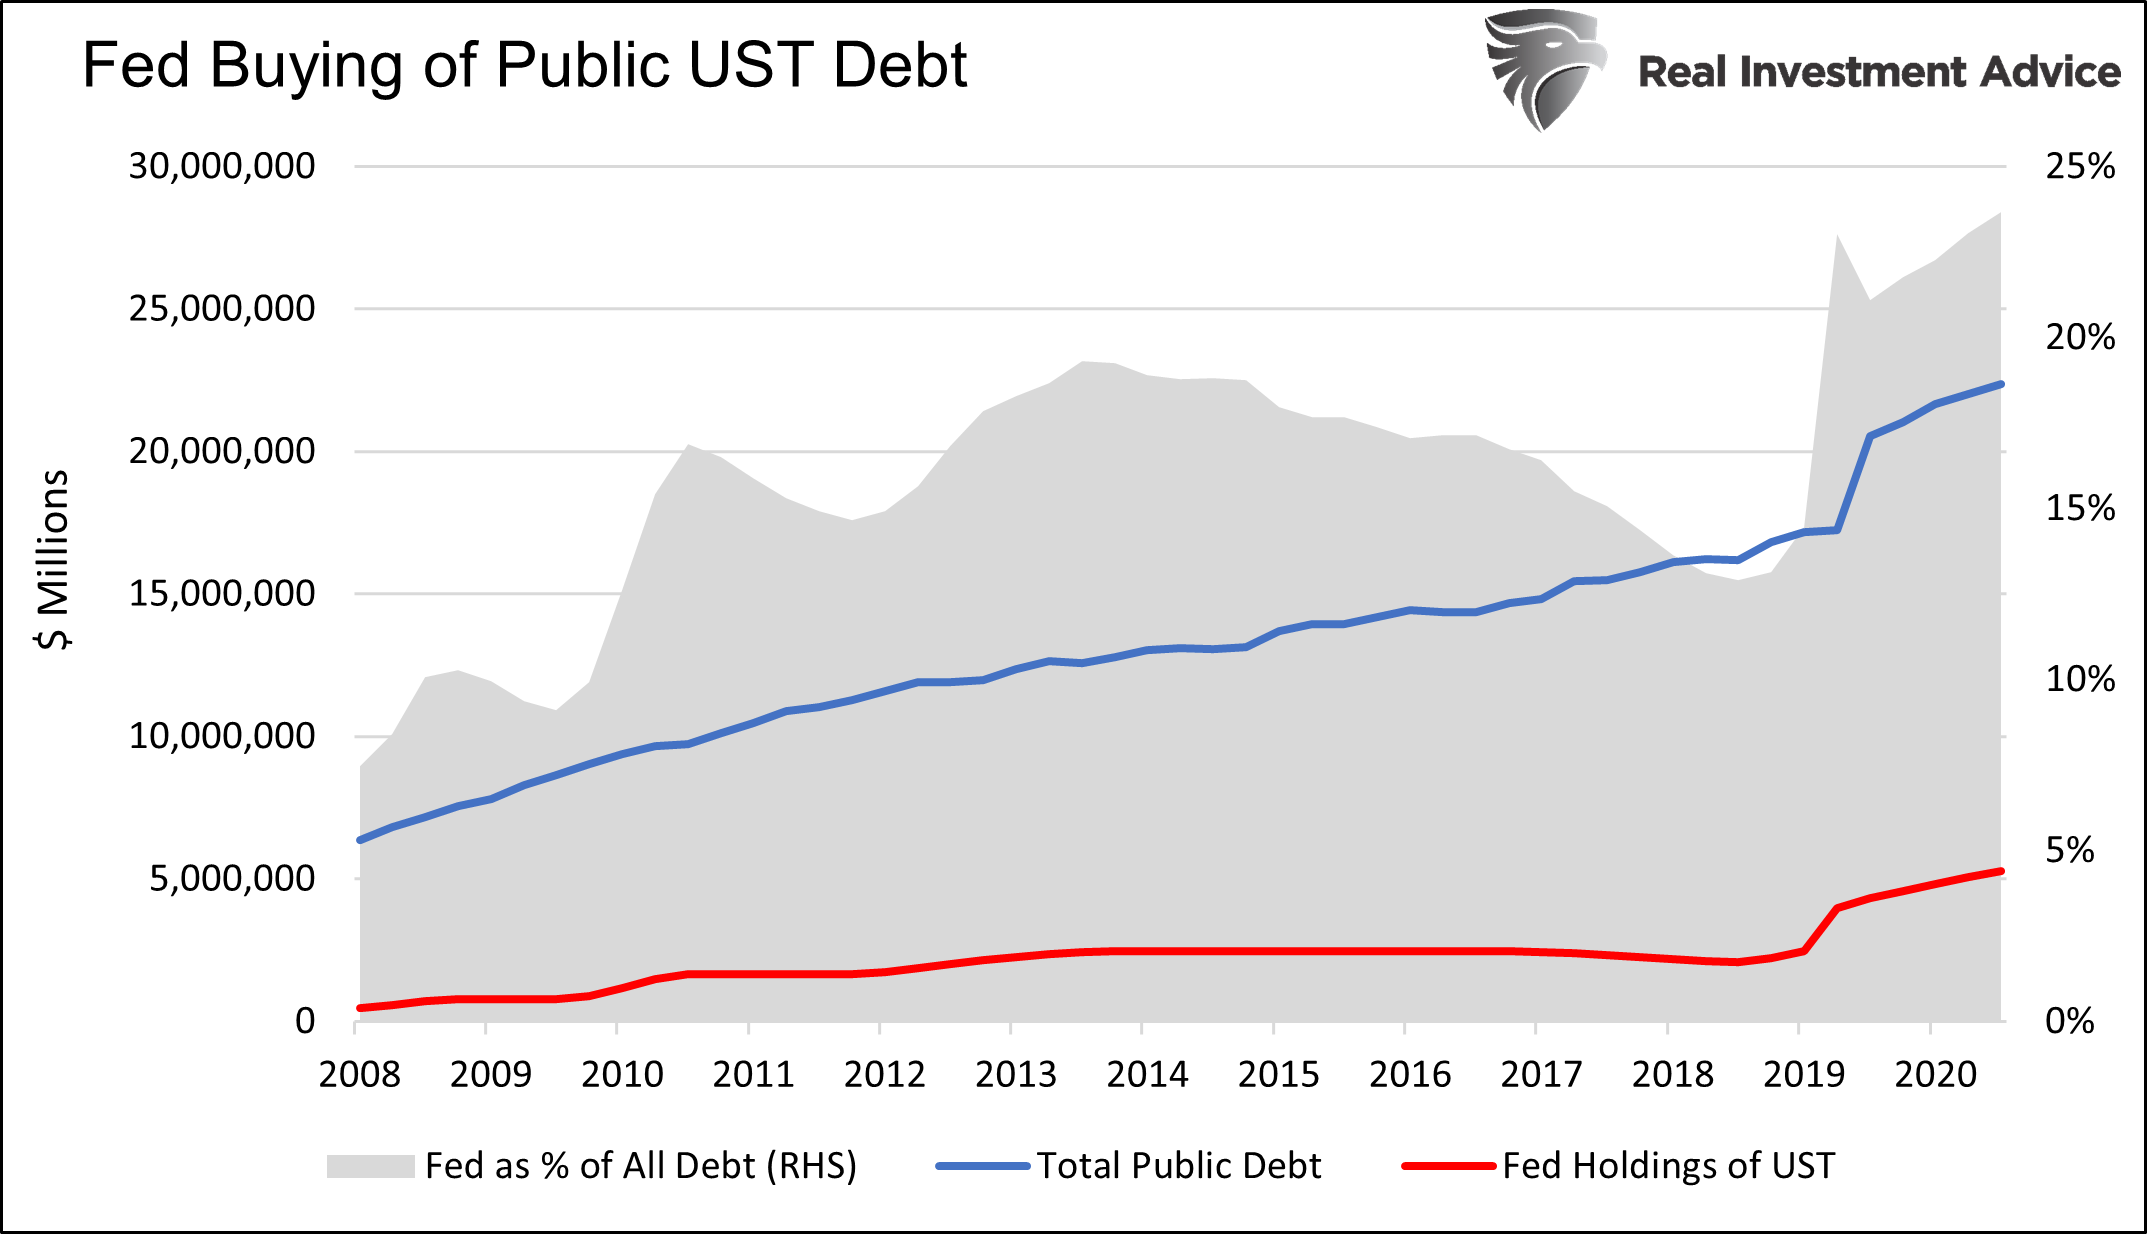 Fed Buying Of Public UST Debt